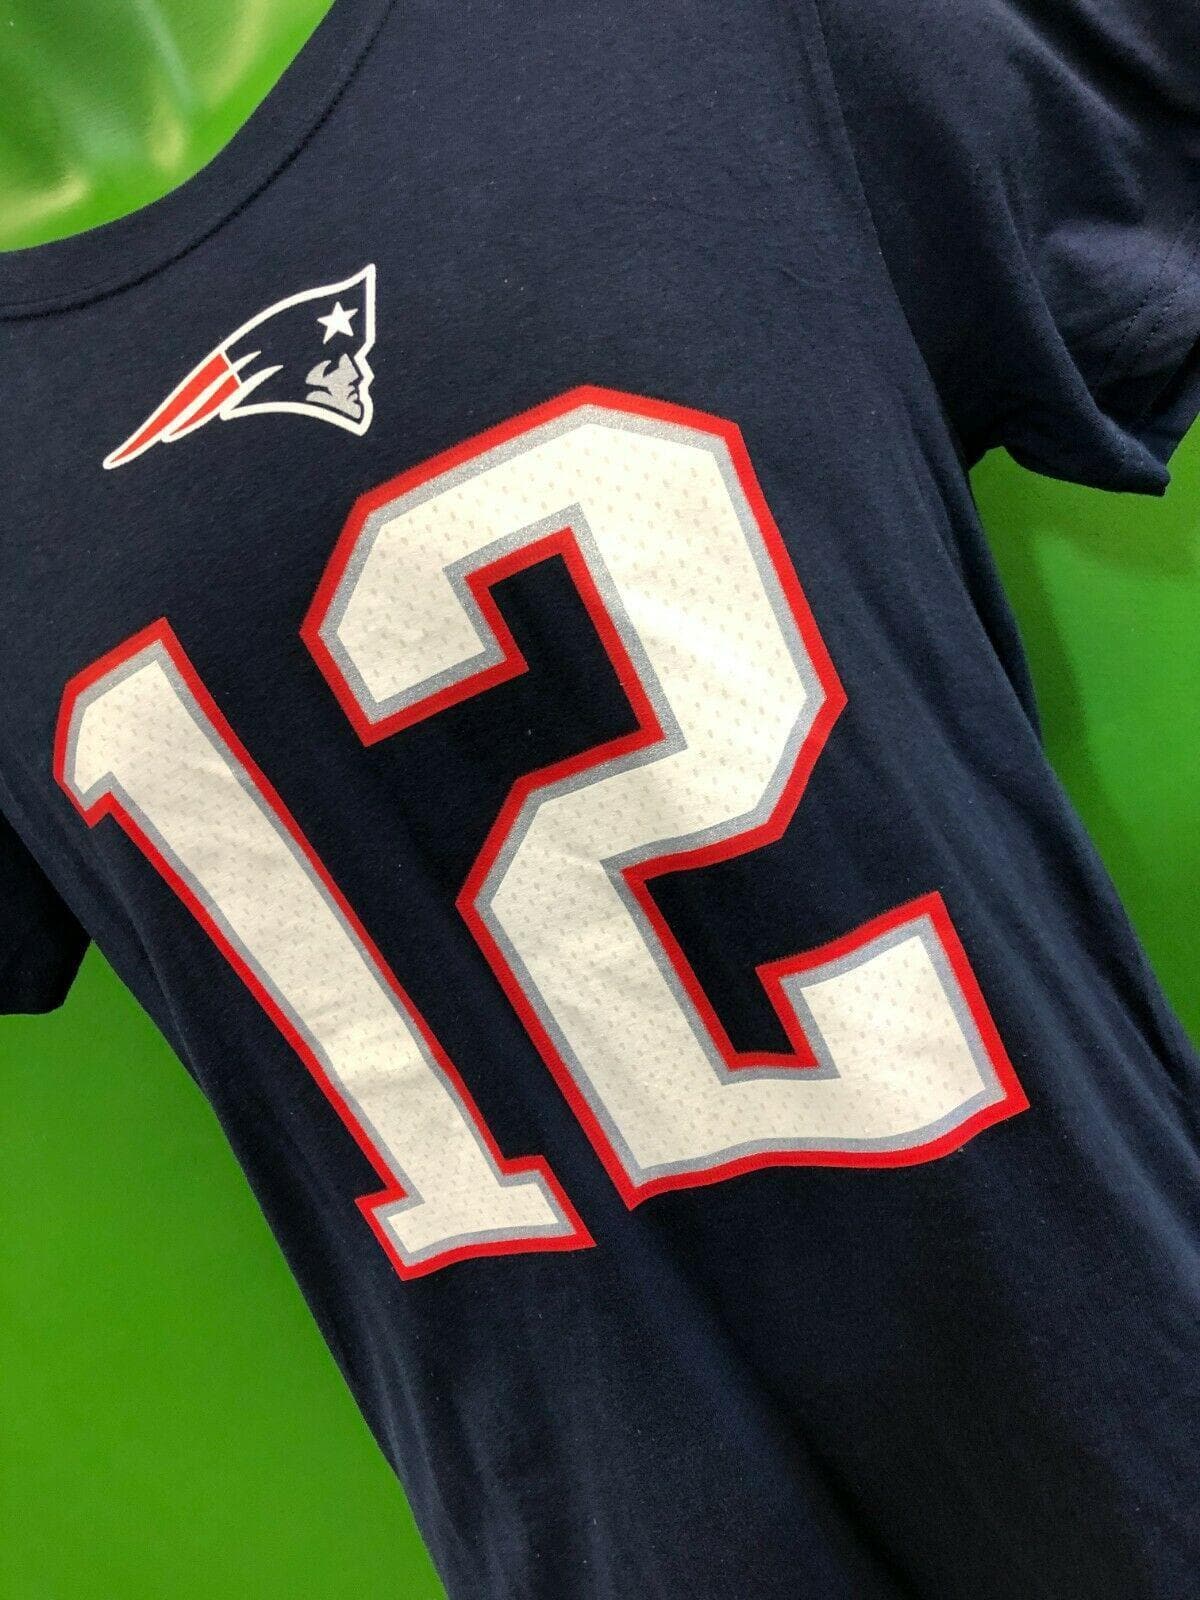 NFL New England Patriots Tom Brady #12 Fanatics T-Shirt Men's Small NWT